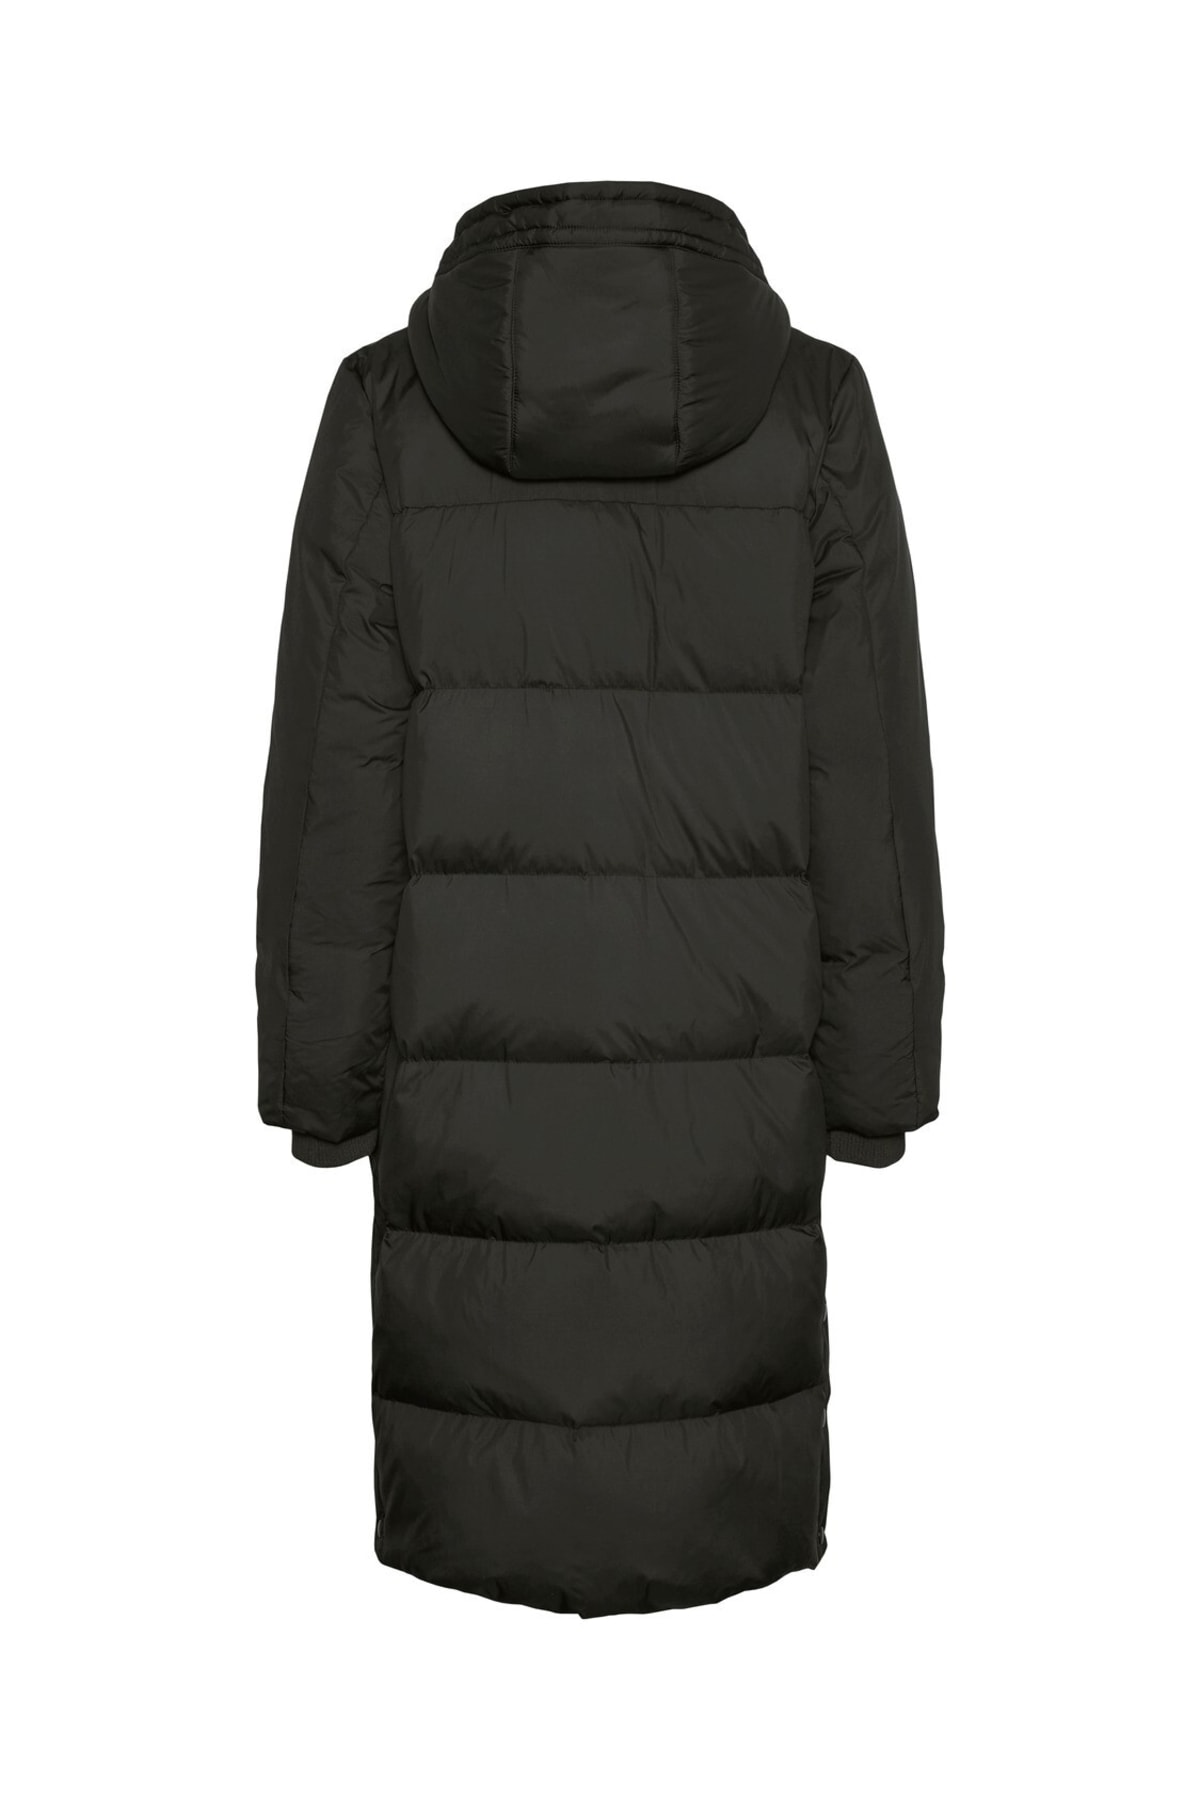 Vero Moda Winterjacke Schwarz Basic Fast ausverkauft QV8478